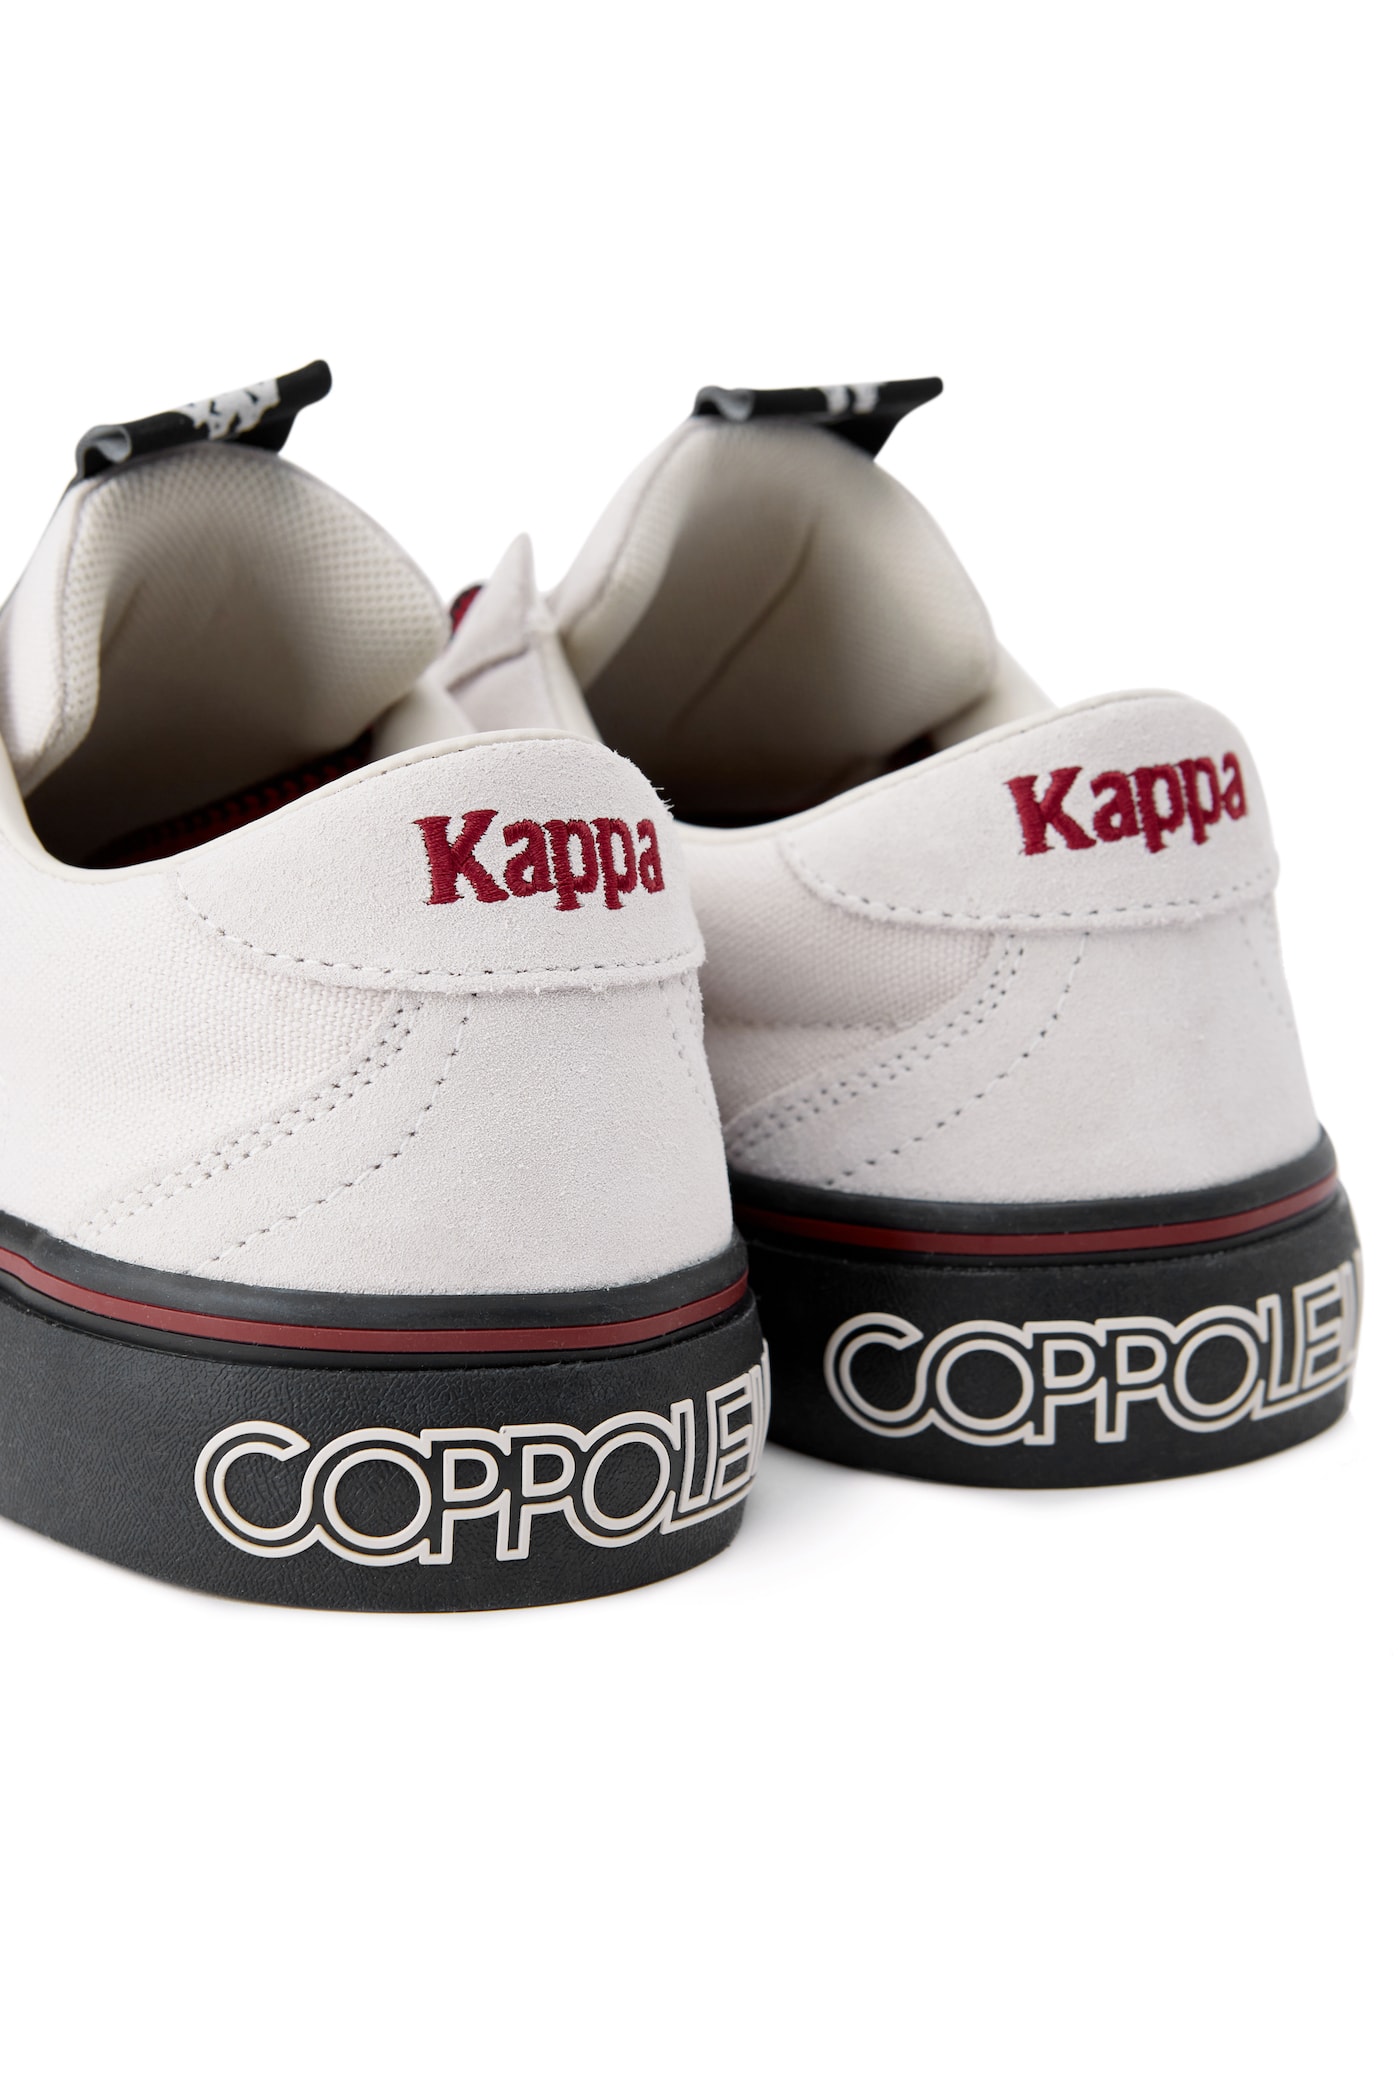 COPPOLELLA 携手 Kappa 打造全新联名系列